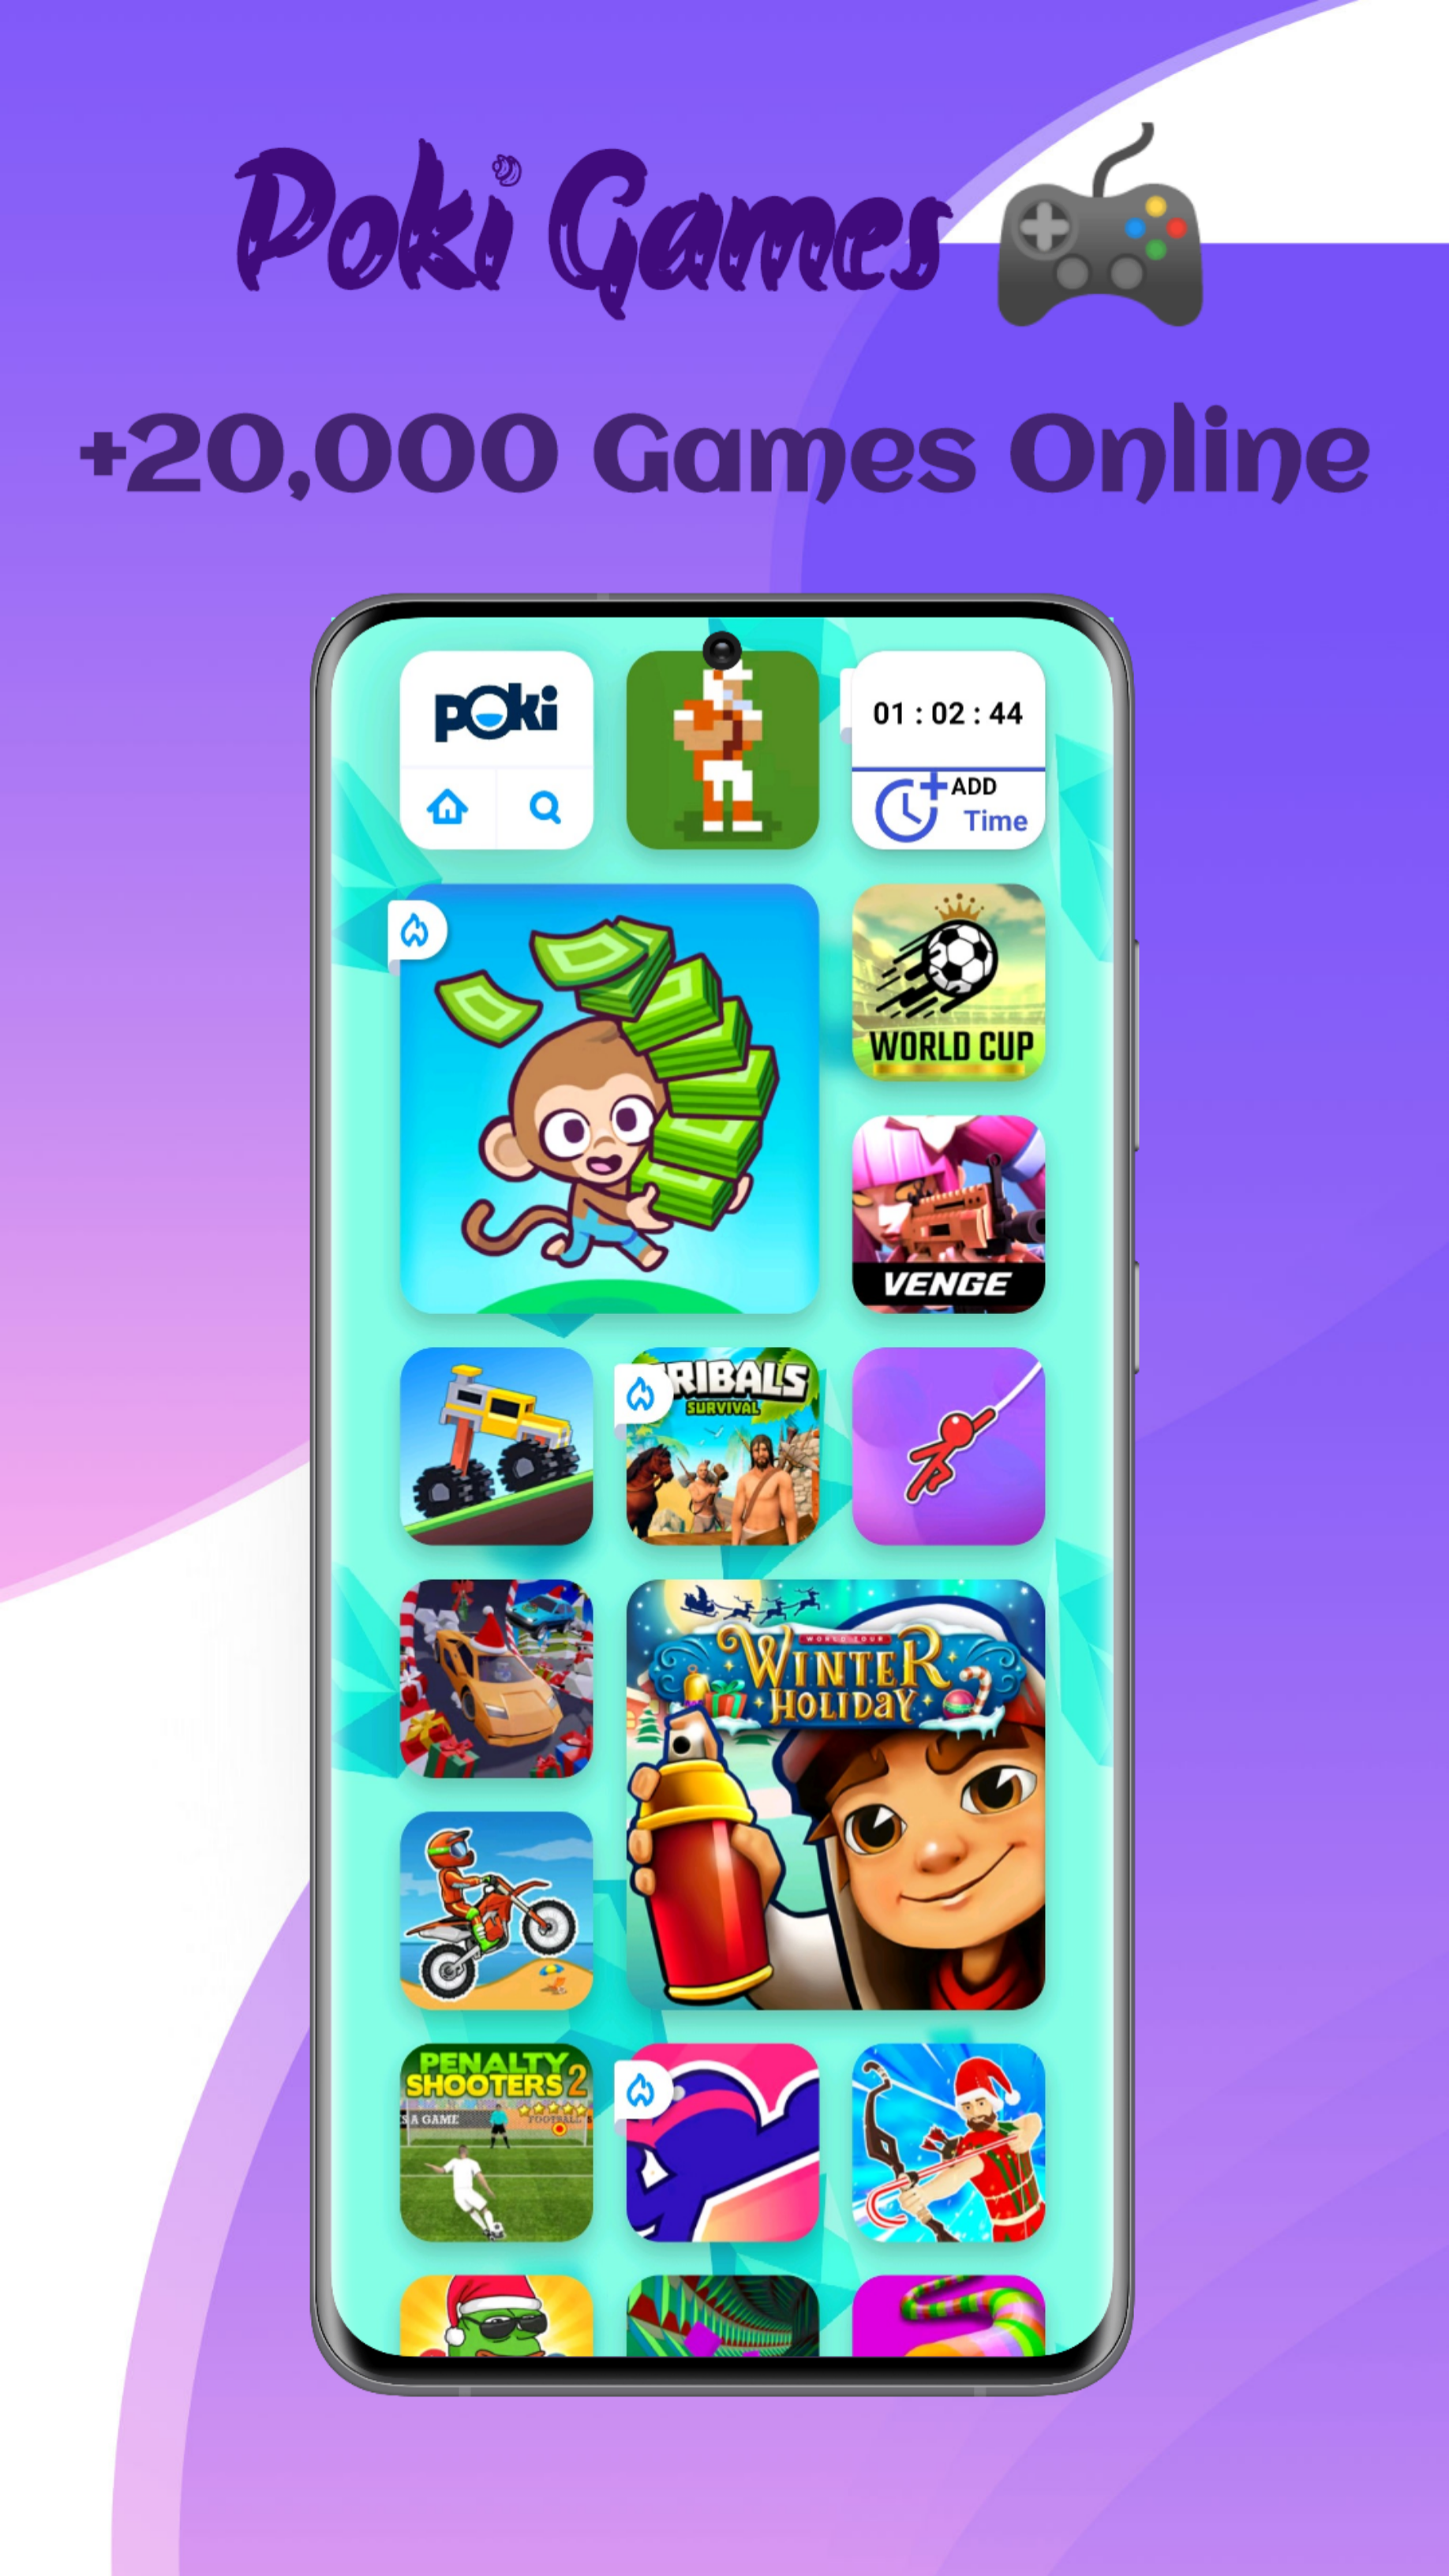 Poki games APK (Android Game) - Baixar Grátis